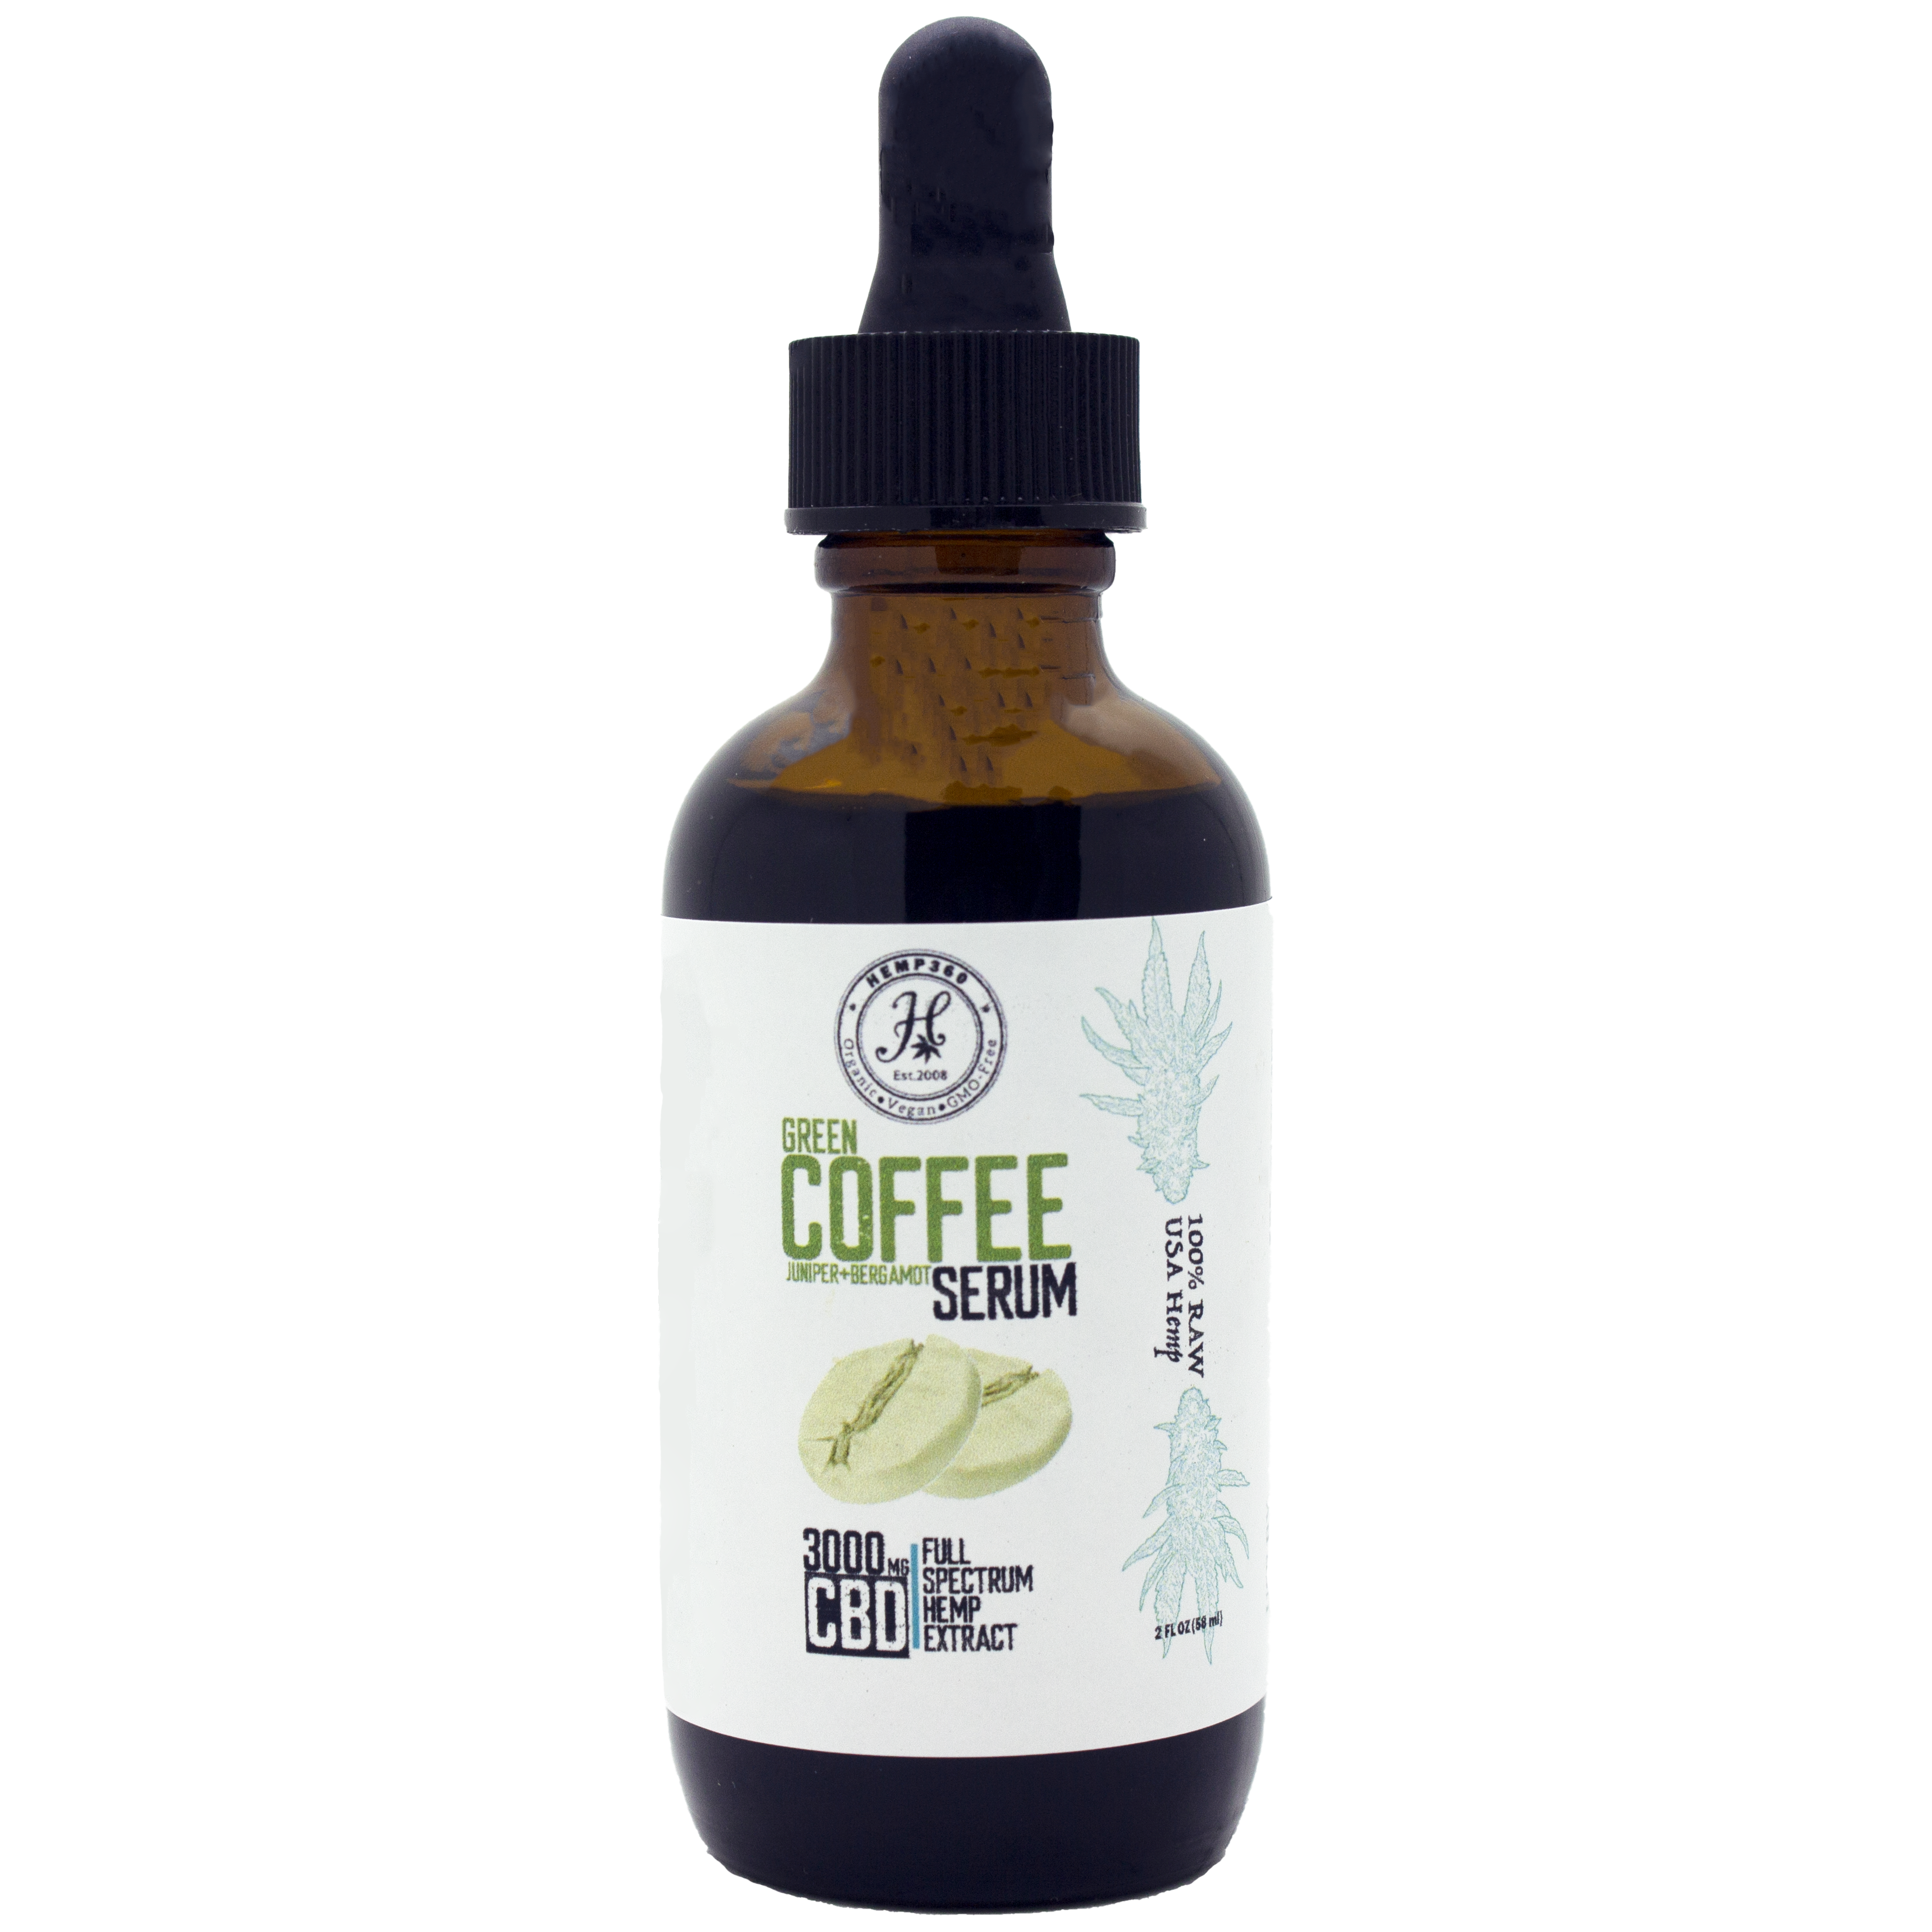 Green Coffee Extract Facial Serum 3000mg CBD